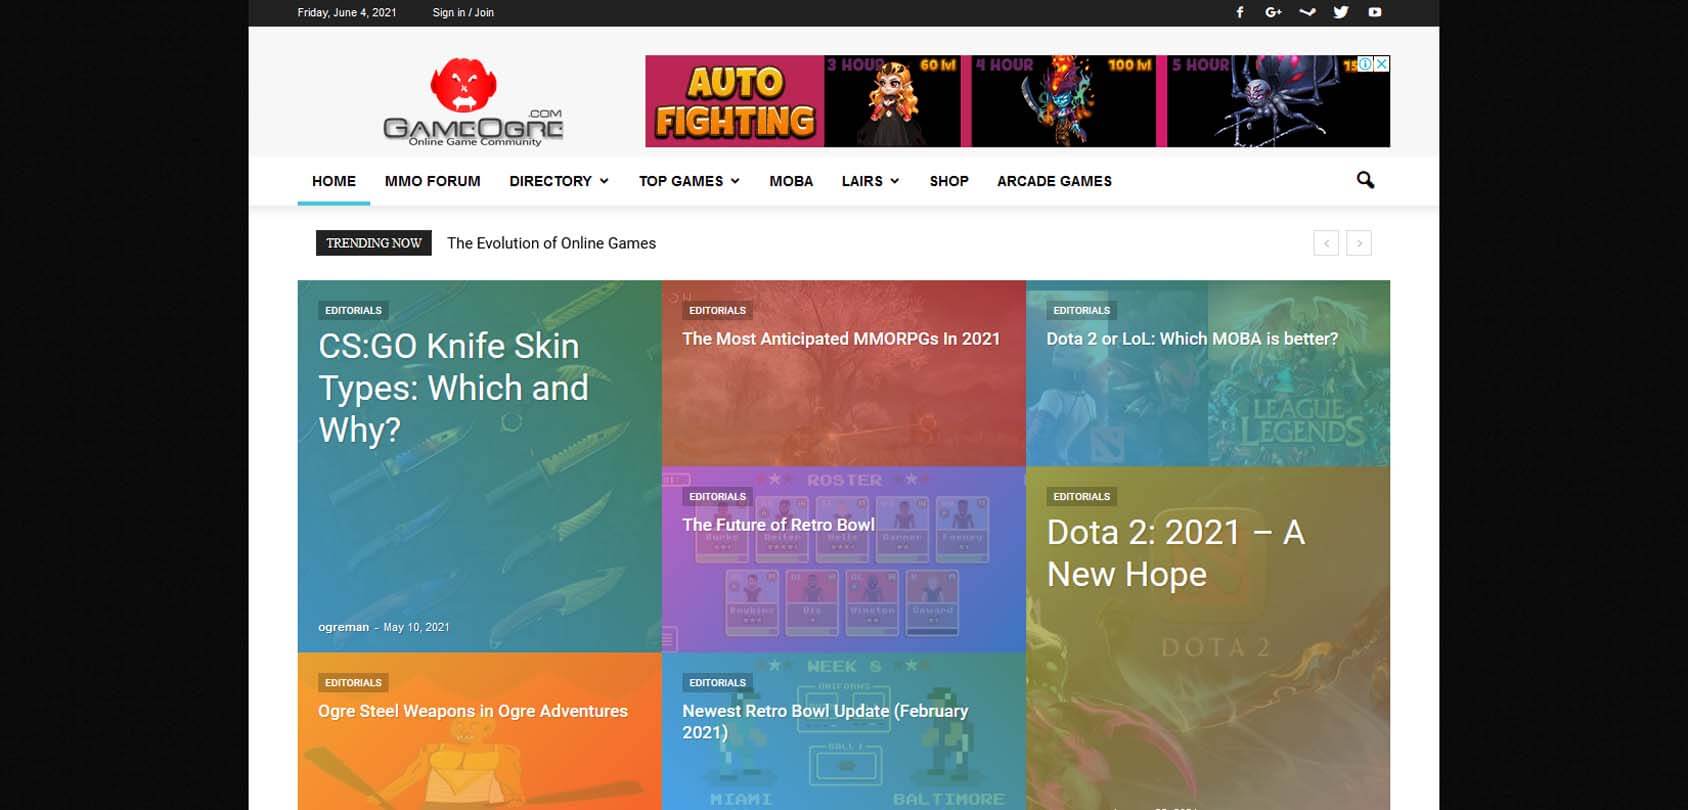 GameOgre Homepage